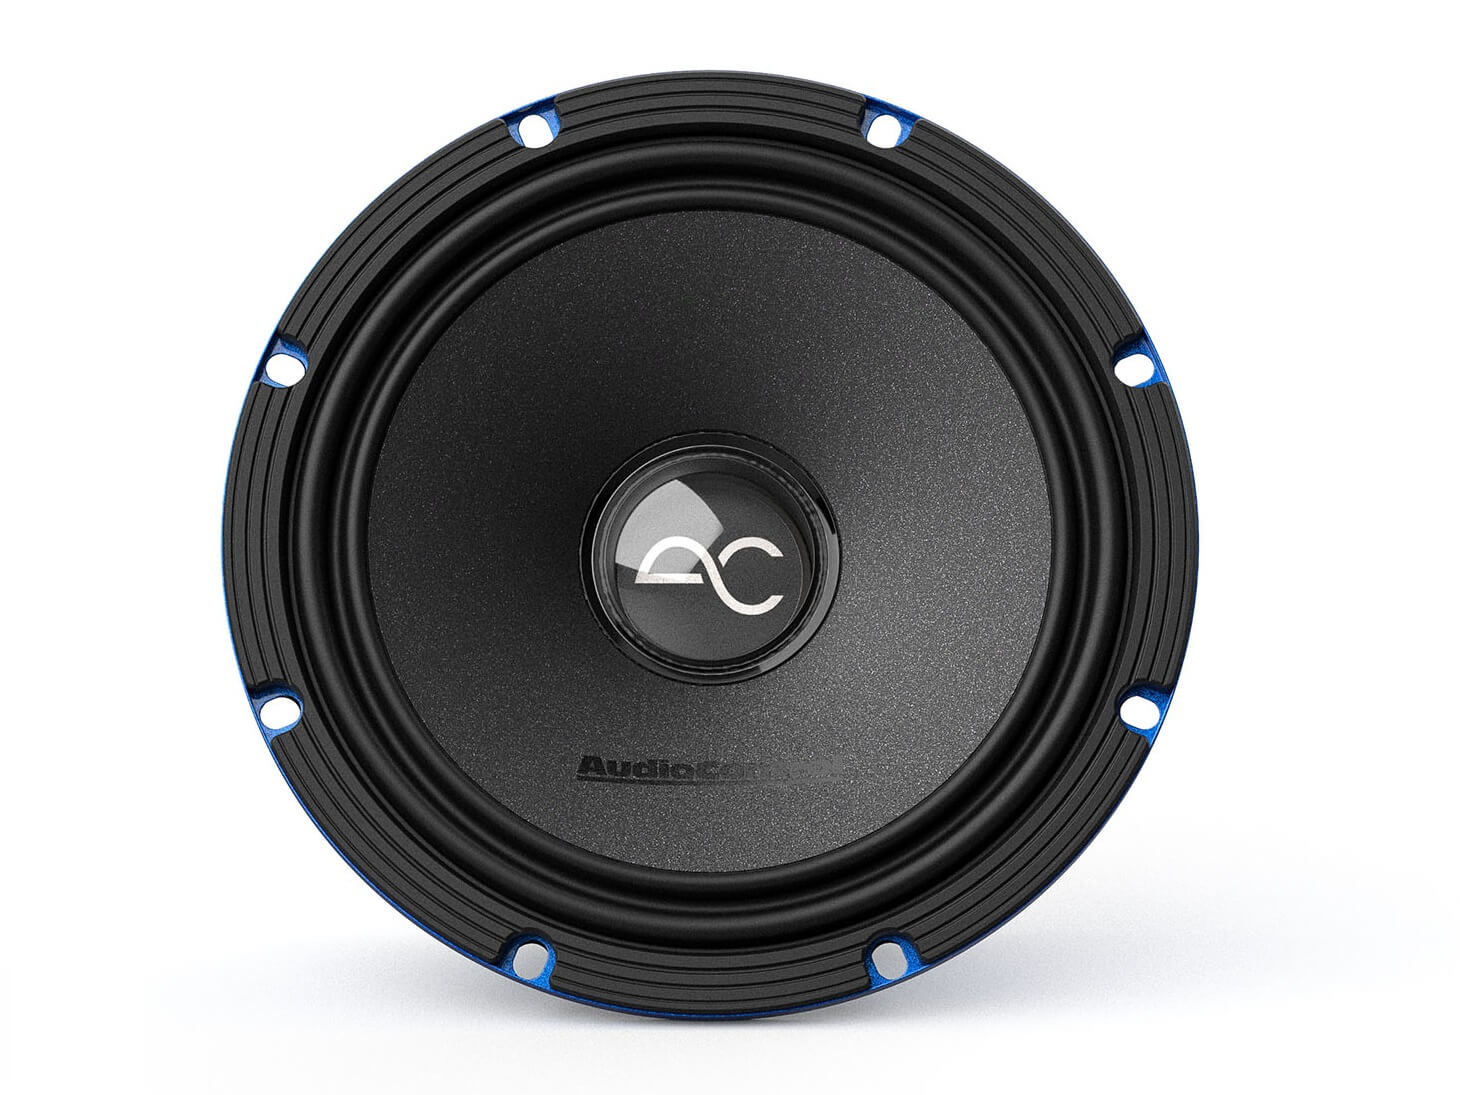 AudioControl PNW-65CS2 - 6.5 Inch Component Speakers